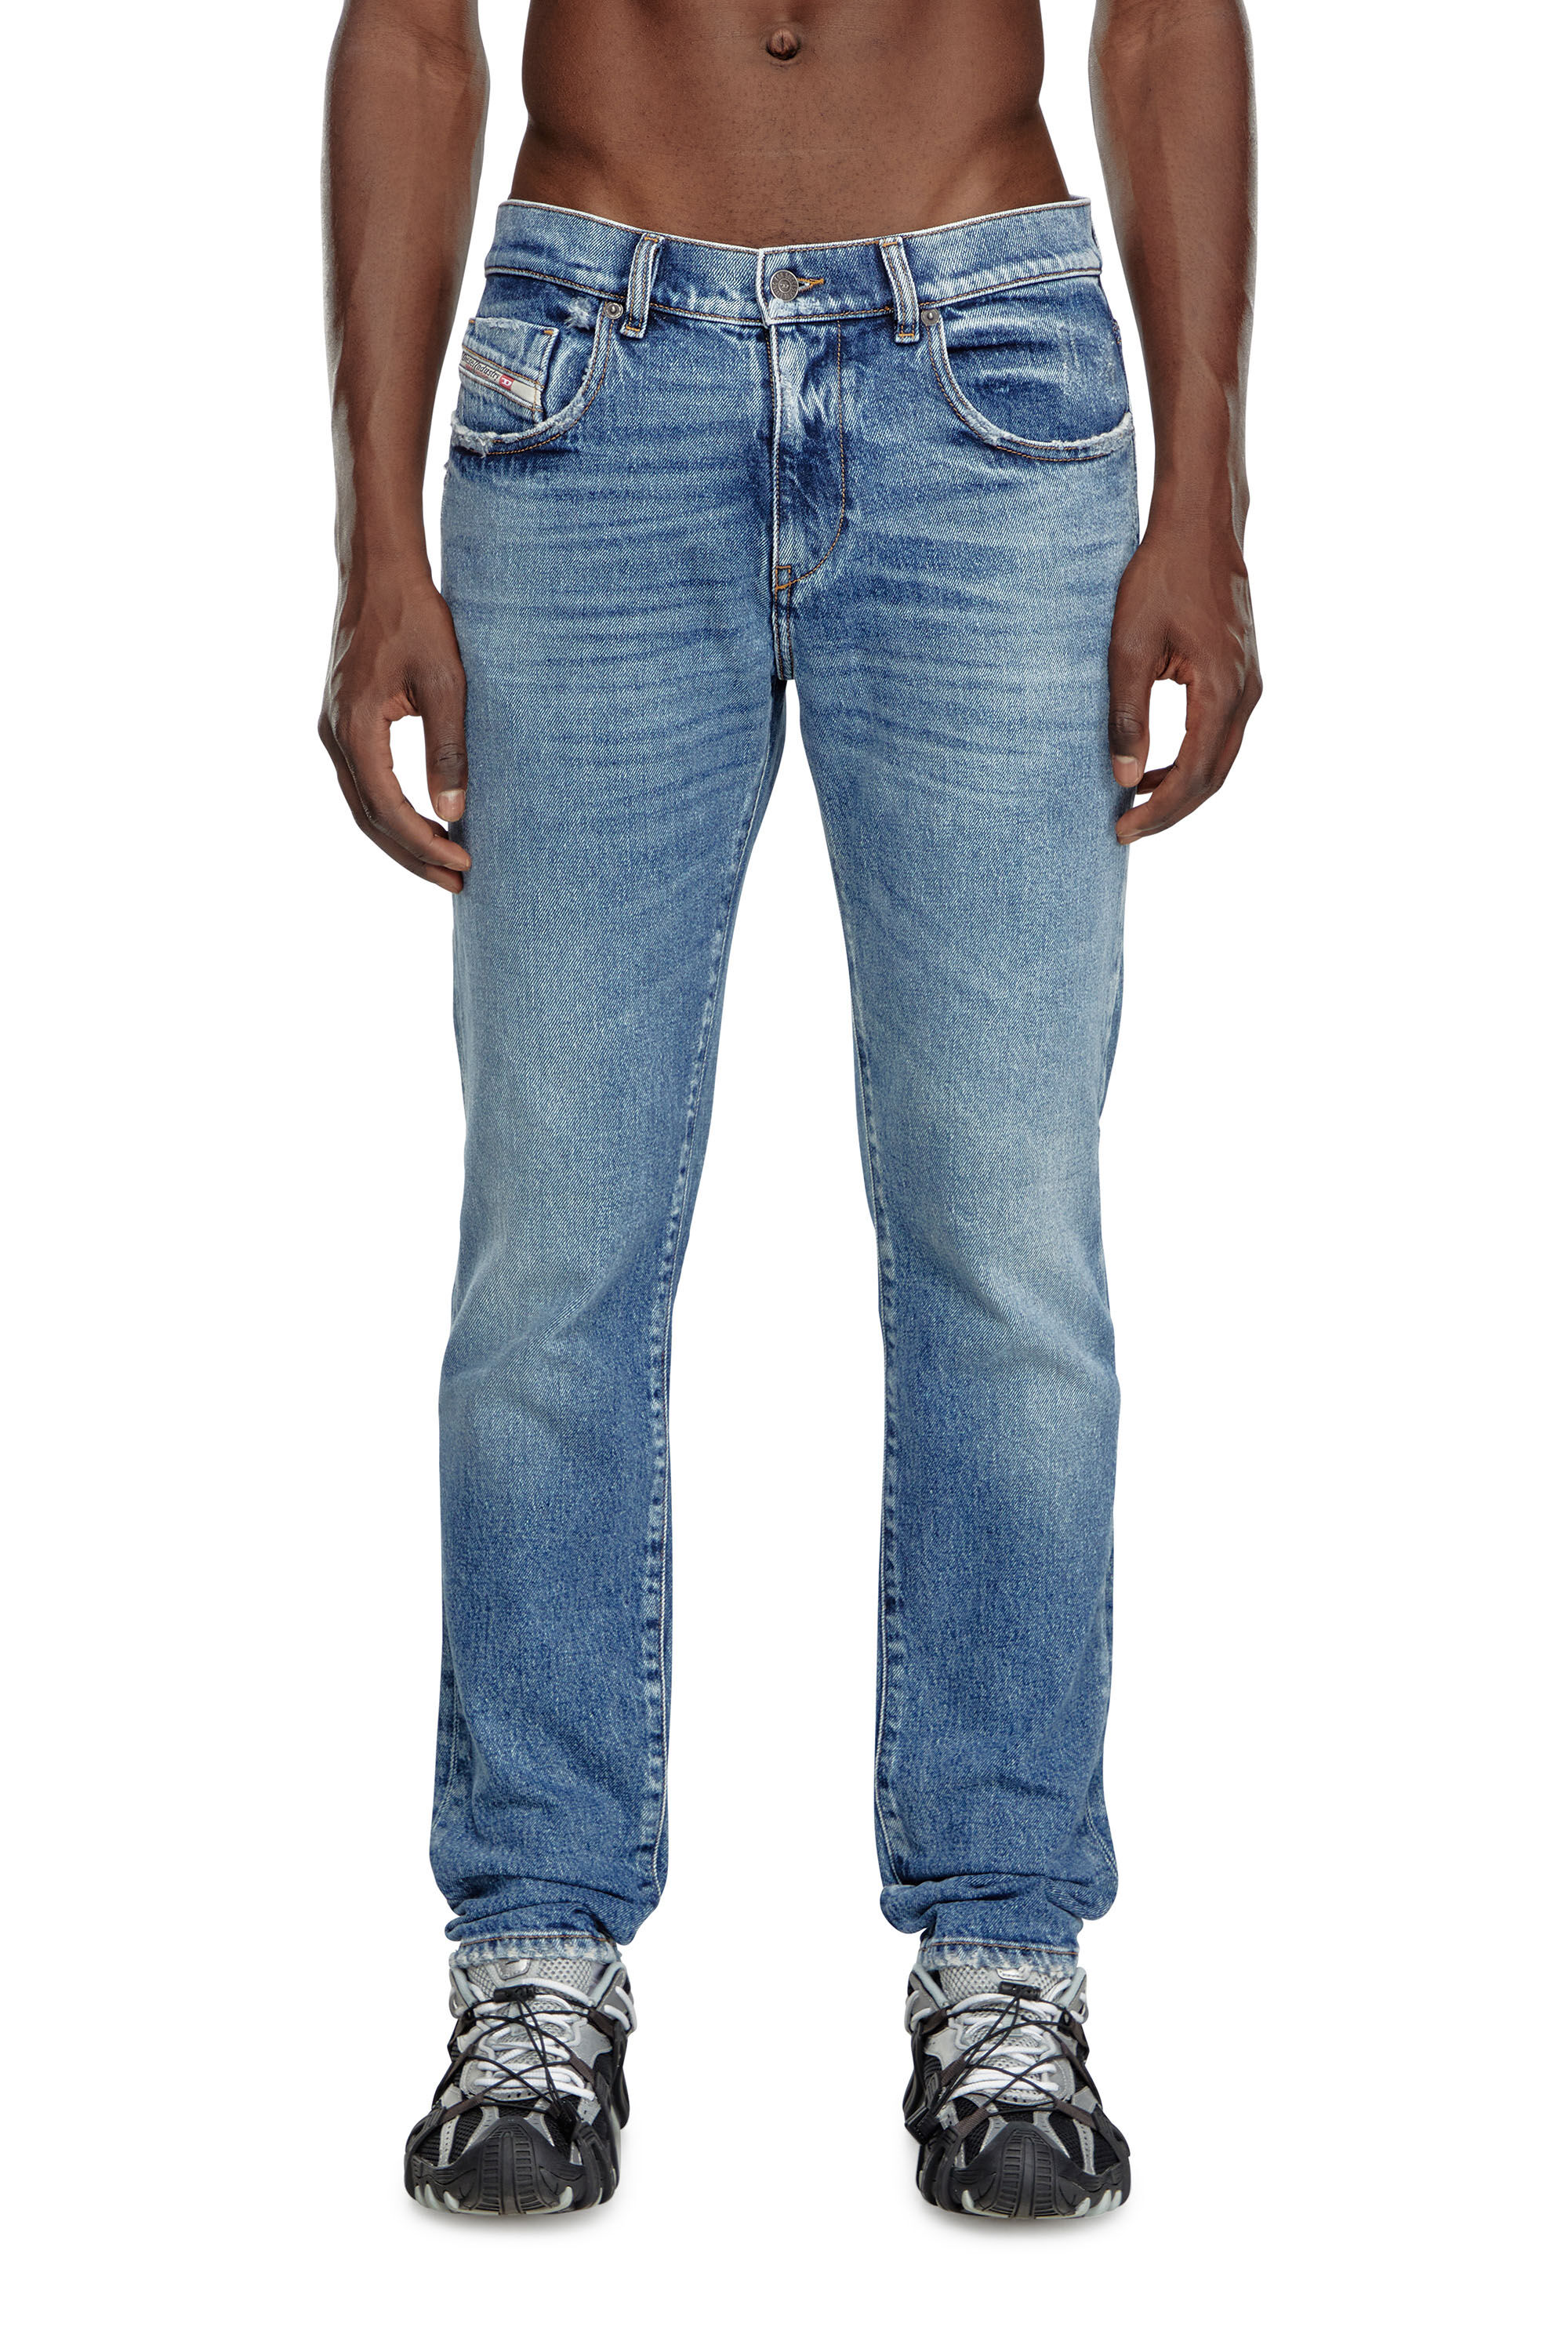 Diesel - Slim Jeans 2019 D-Strukt 09F16, Hombre Slim Jeans - 2019 D-Strukt in Azul marino - Image 3